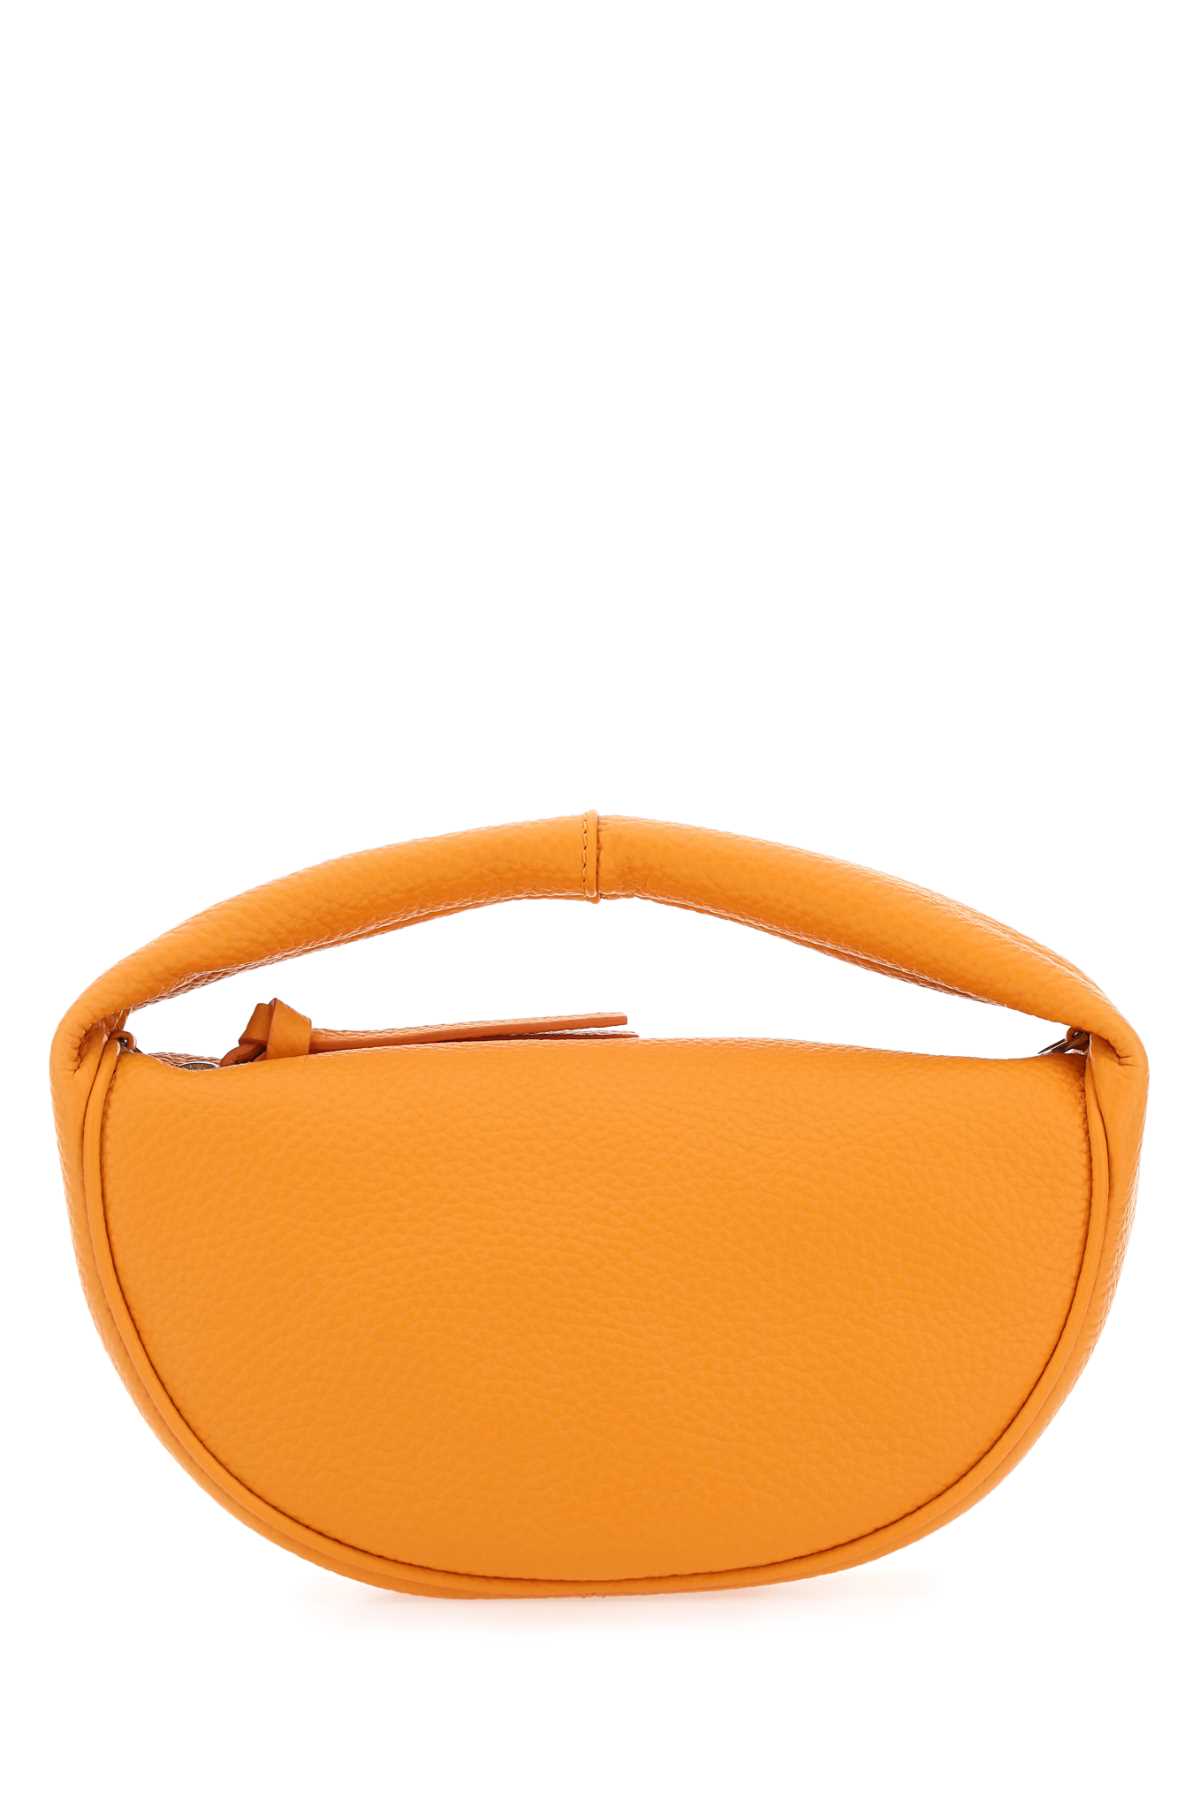 BY FAR Orange Leather Baby Cush Handbag